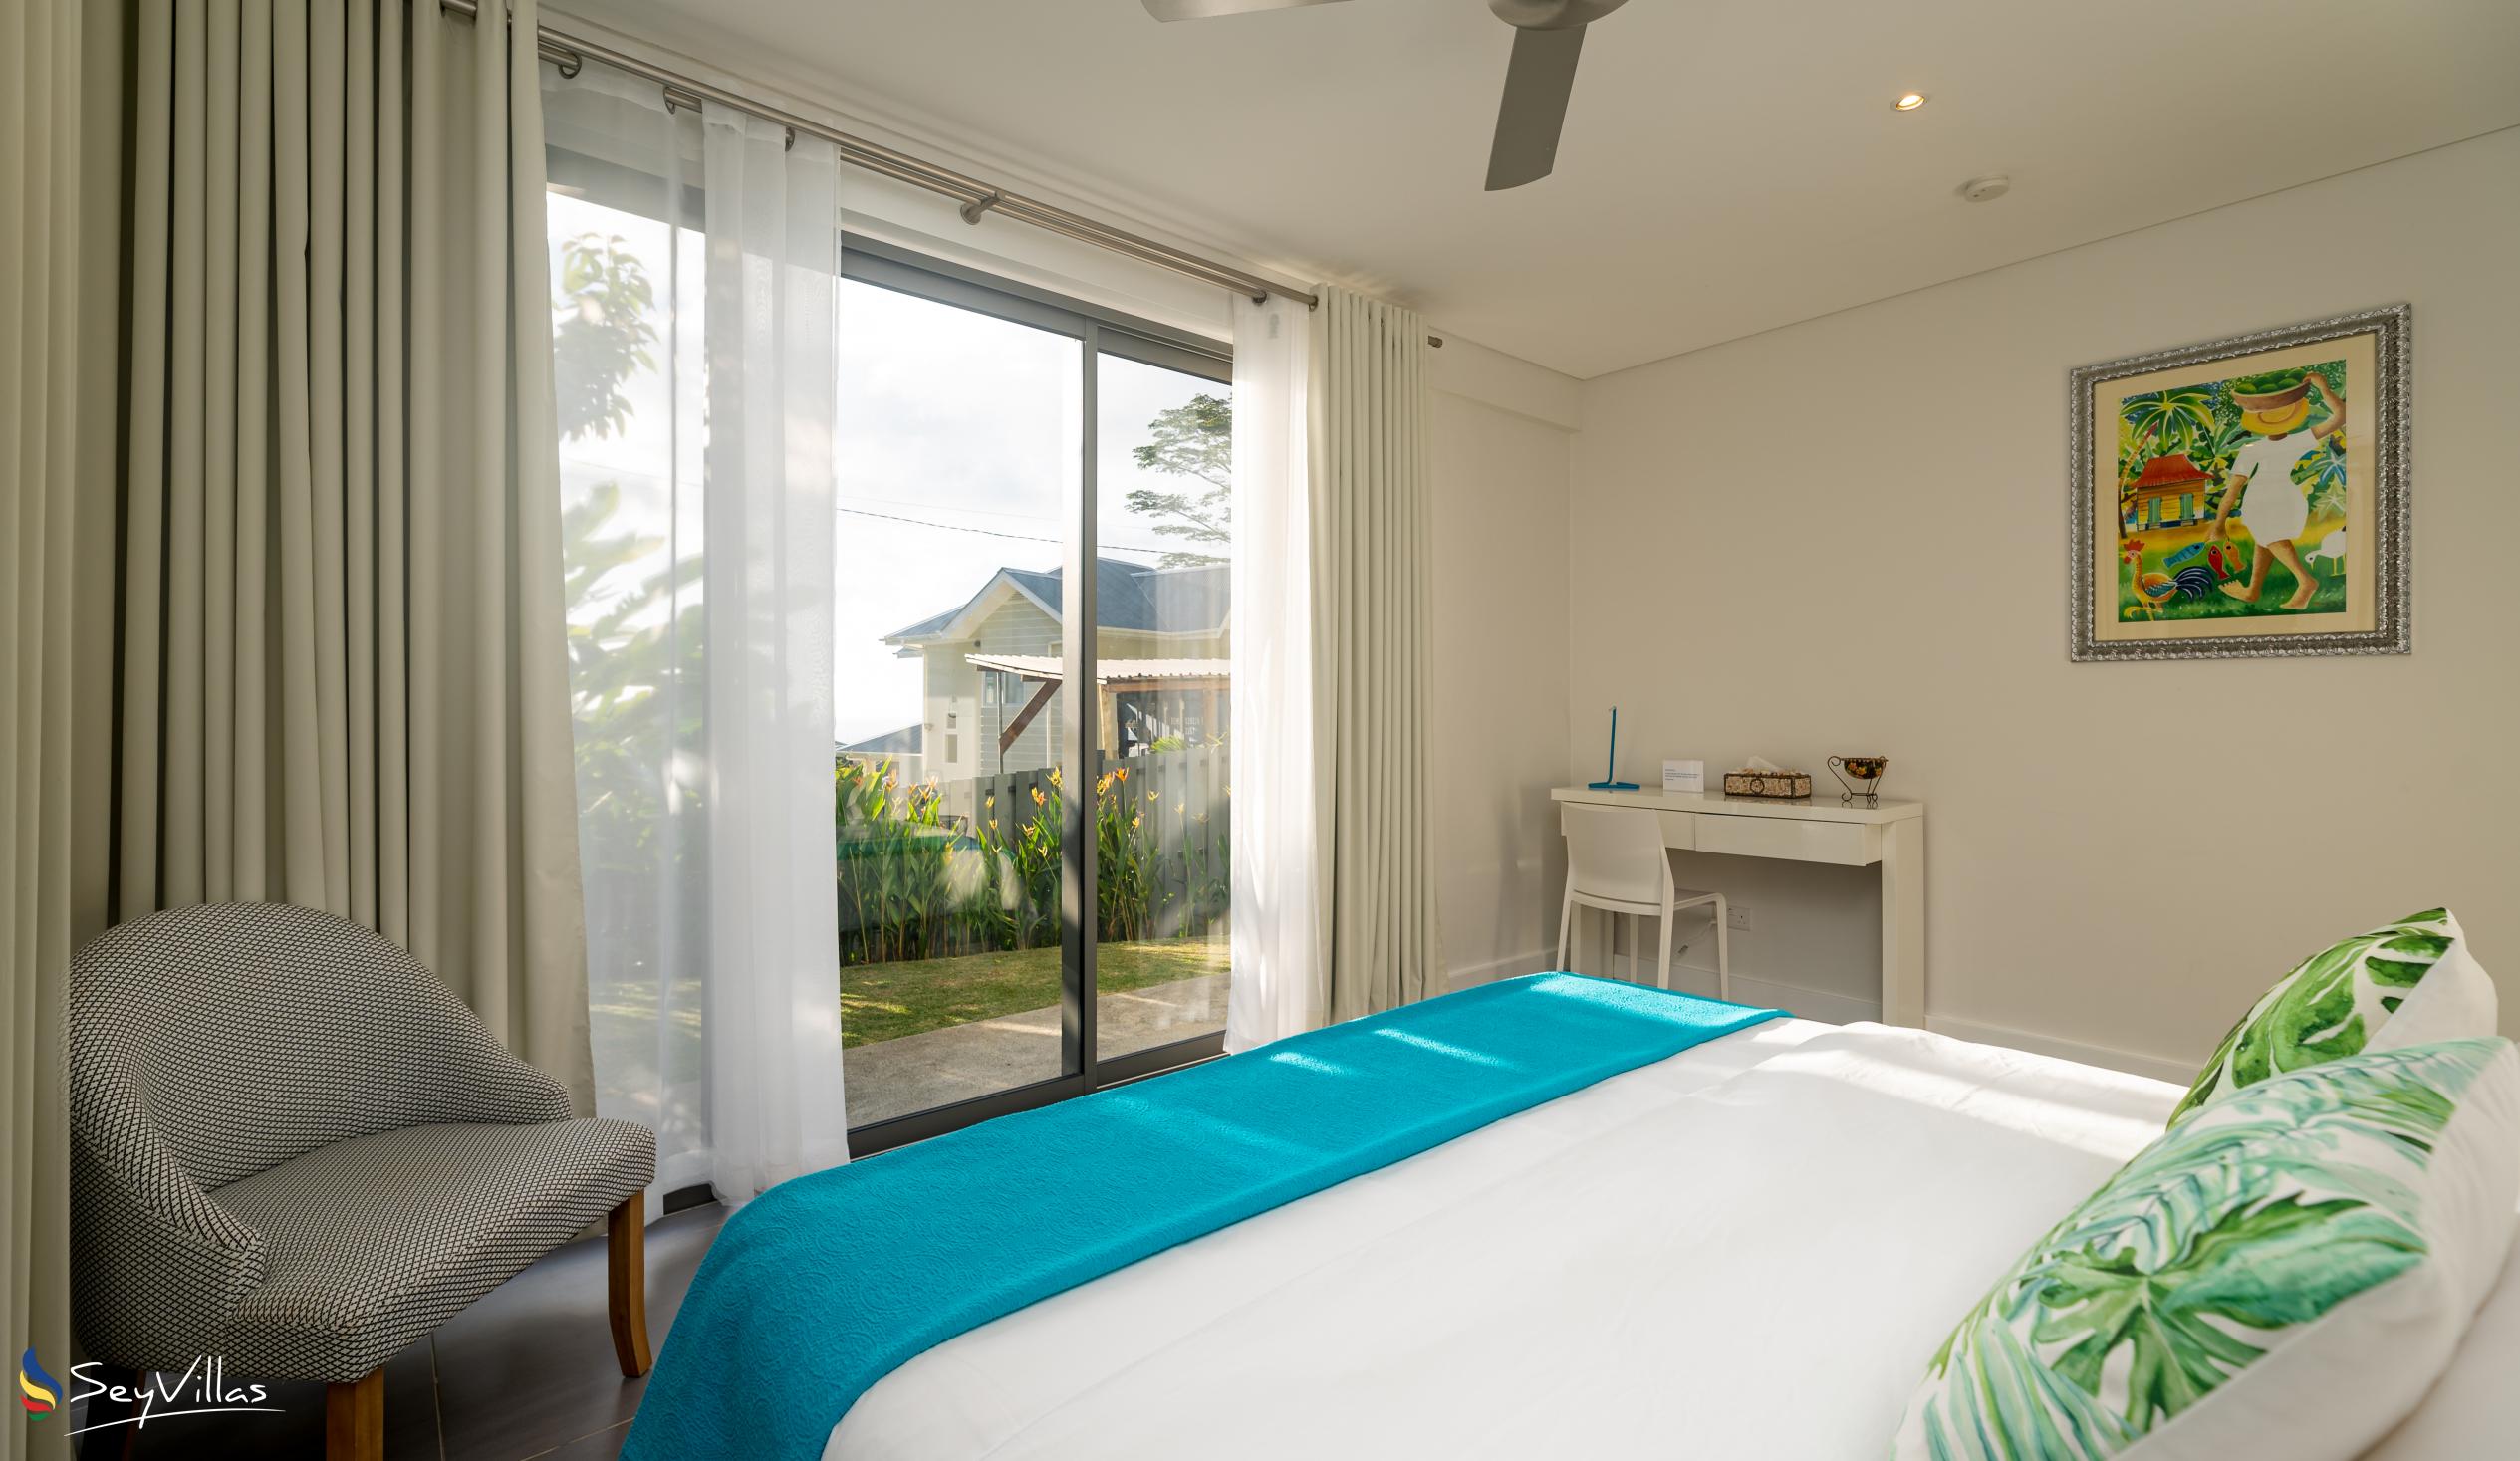 Photo 80: Roz Avel Villa - 2-Bedroom Villa - Mahé (Seychelles)